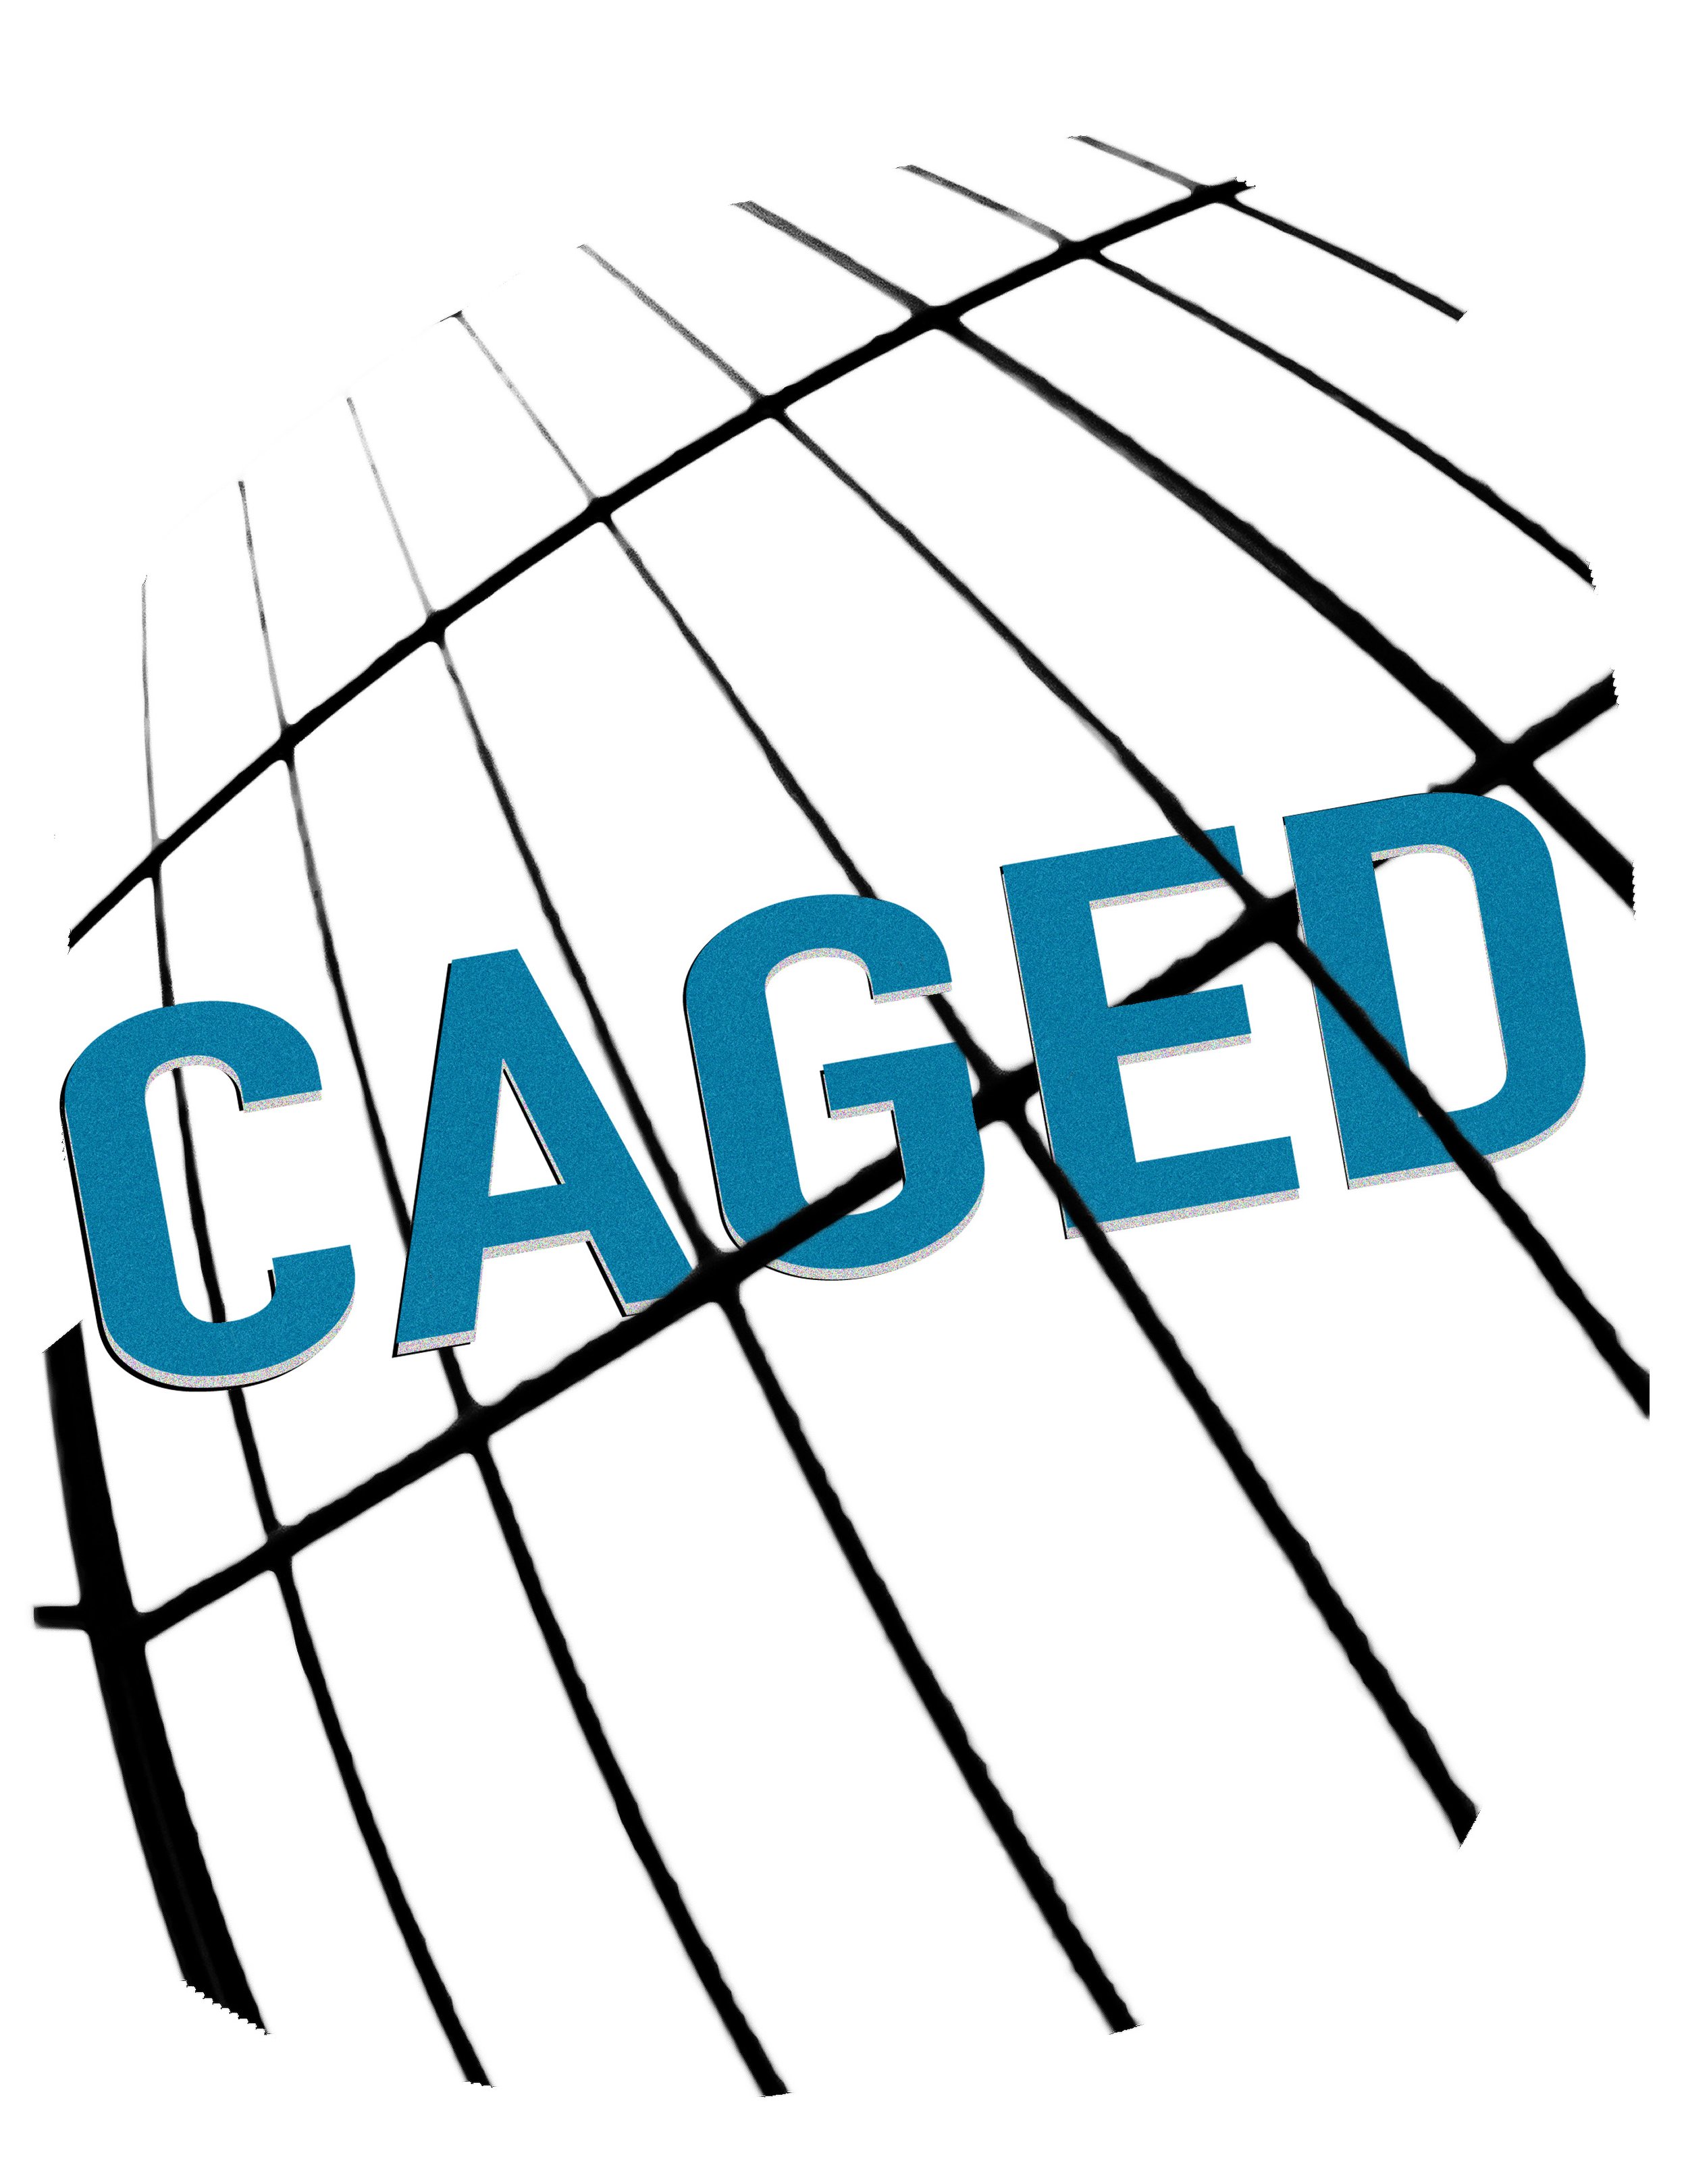 Caged.jpg